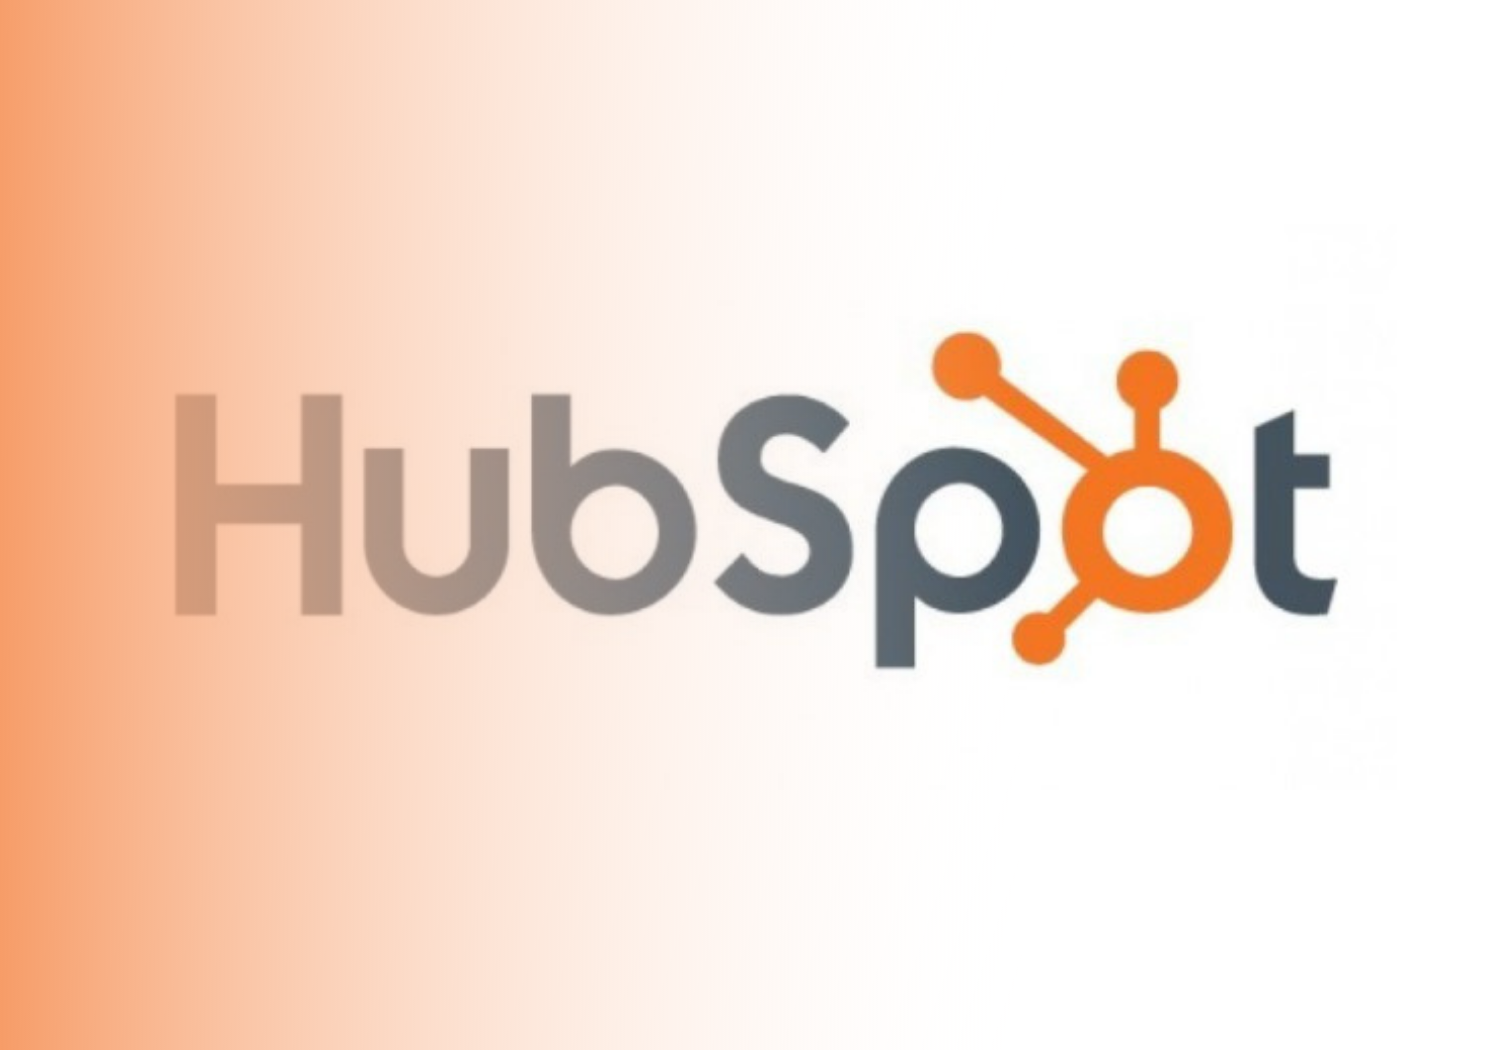 Hubspot-logo-image-orange-fadeout 2